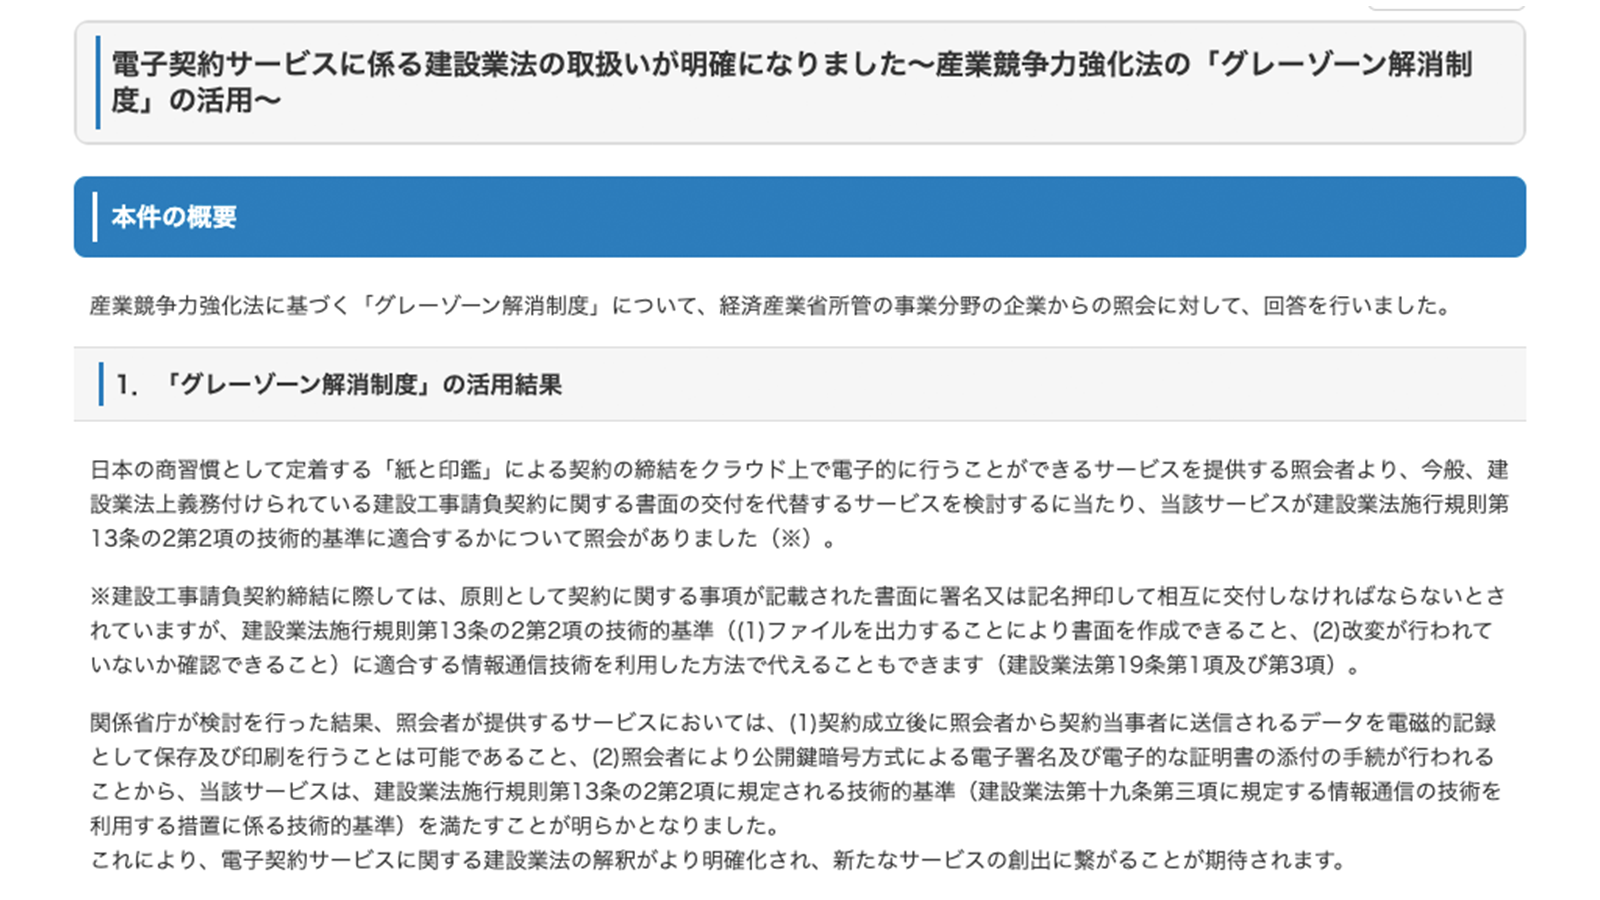 https://www.meti.go.jp/press/2017/01/20180129001/20180129001.html 2019年10月9日最終アクセス